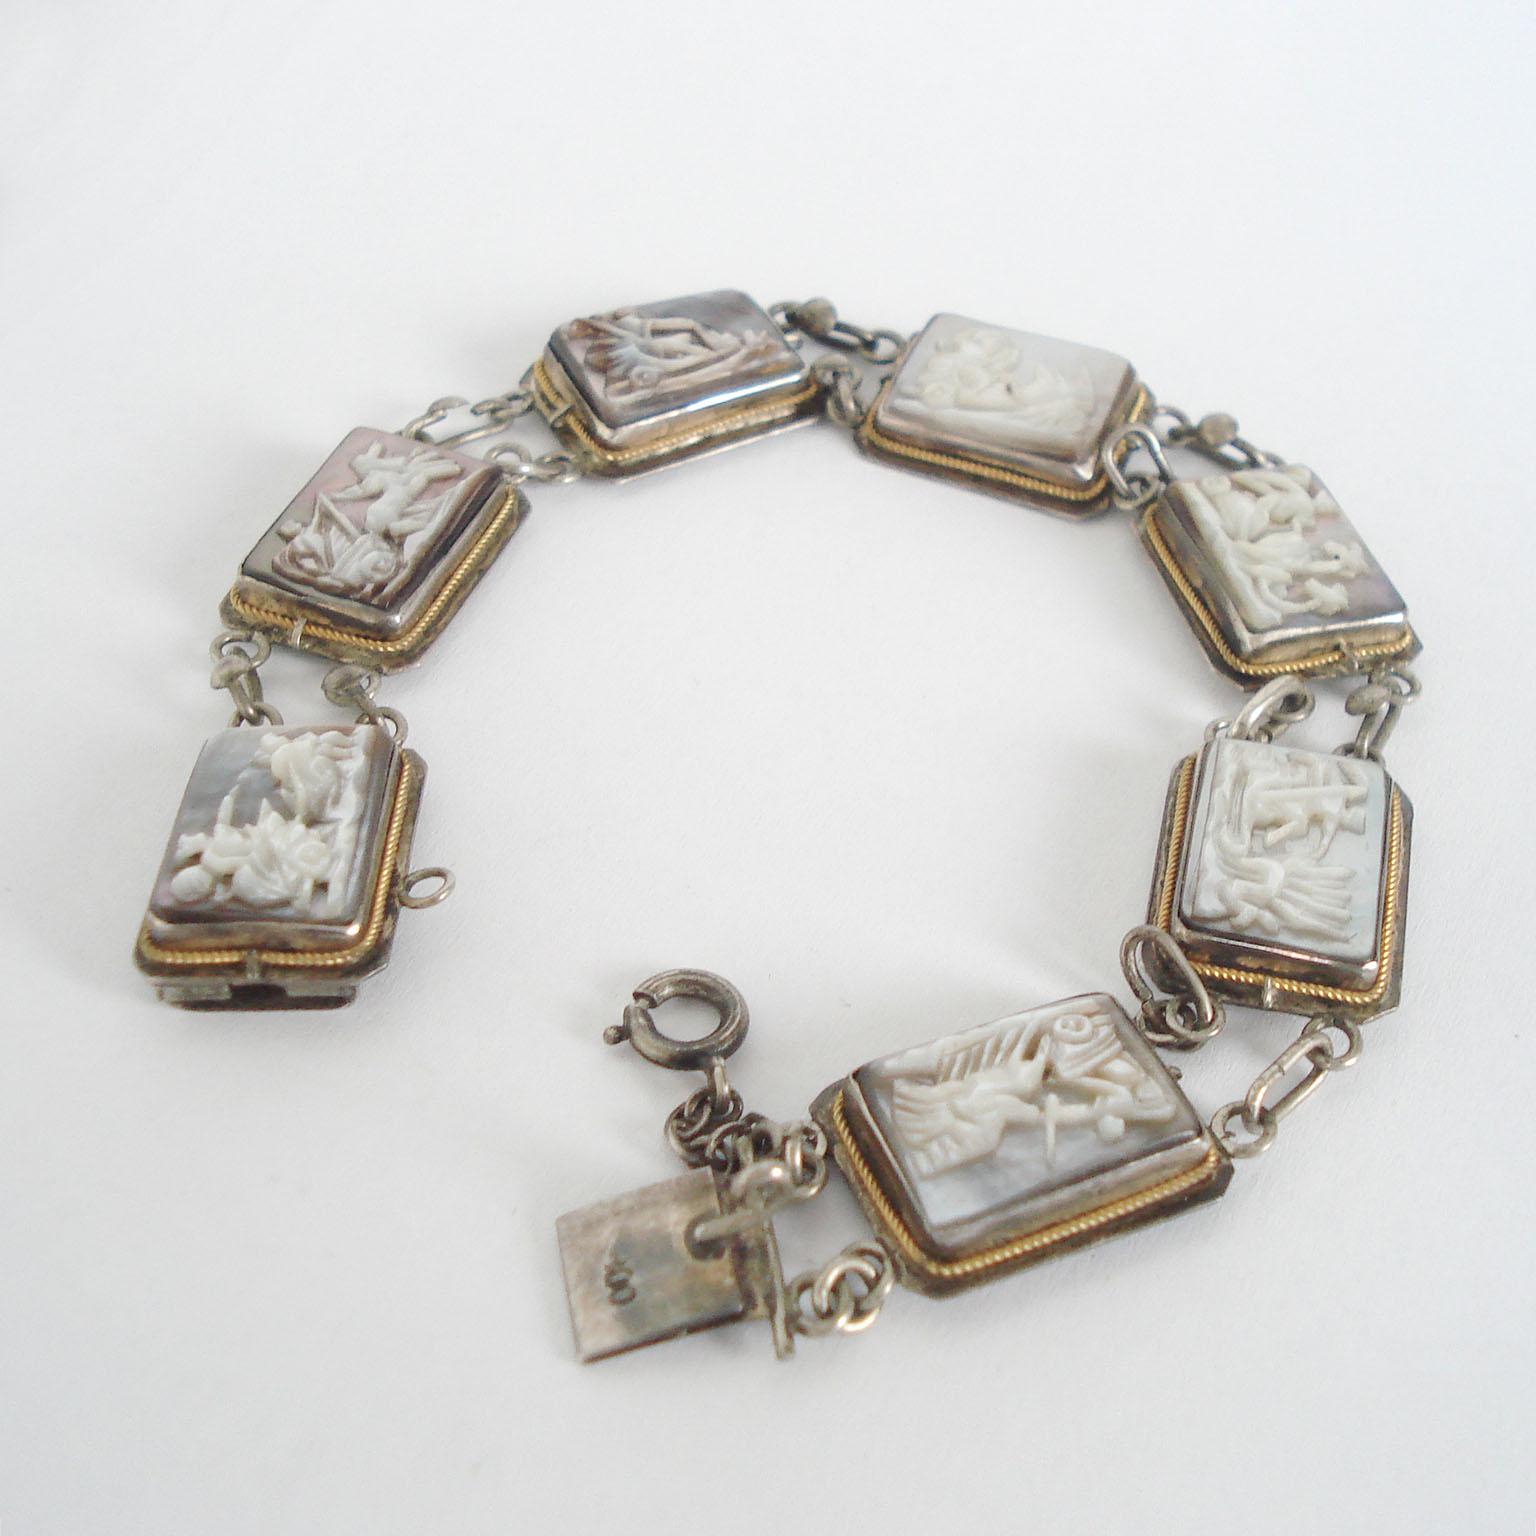 Italian Art Deco Seven Days Silver Bracelet with Chariots Motif